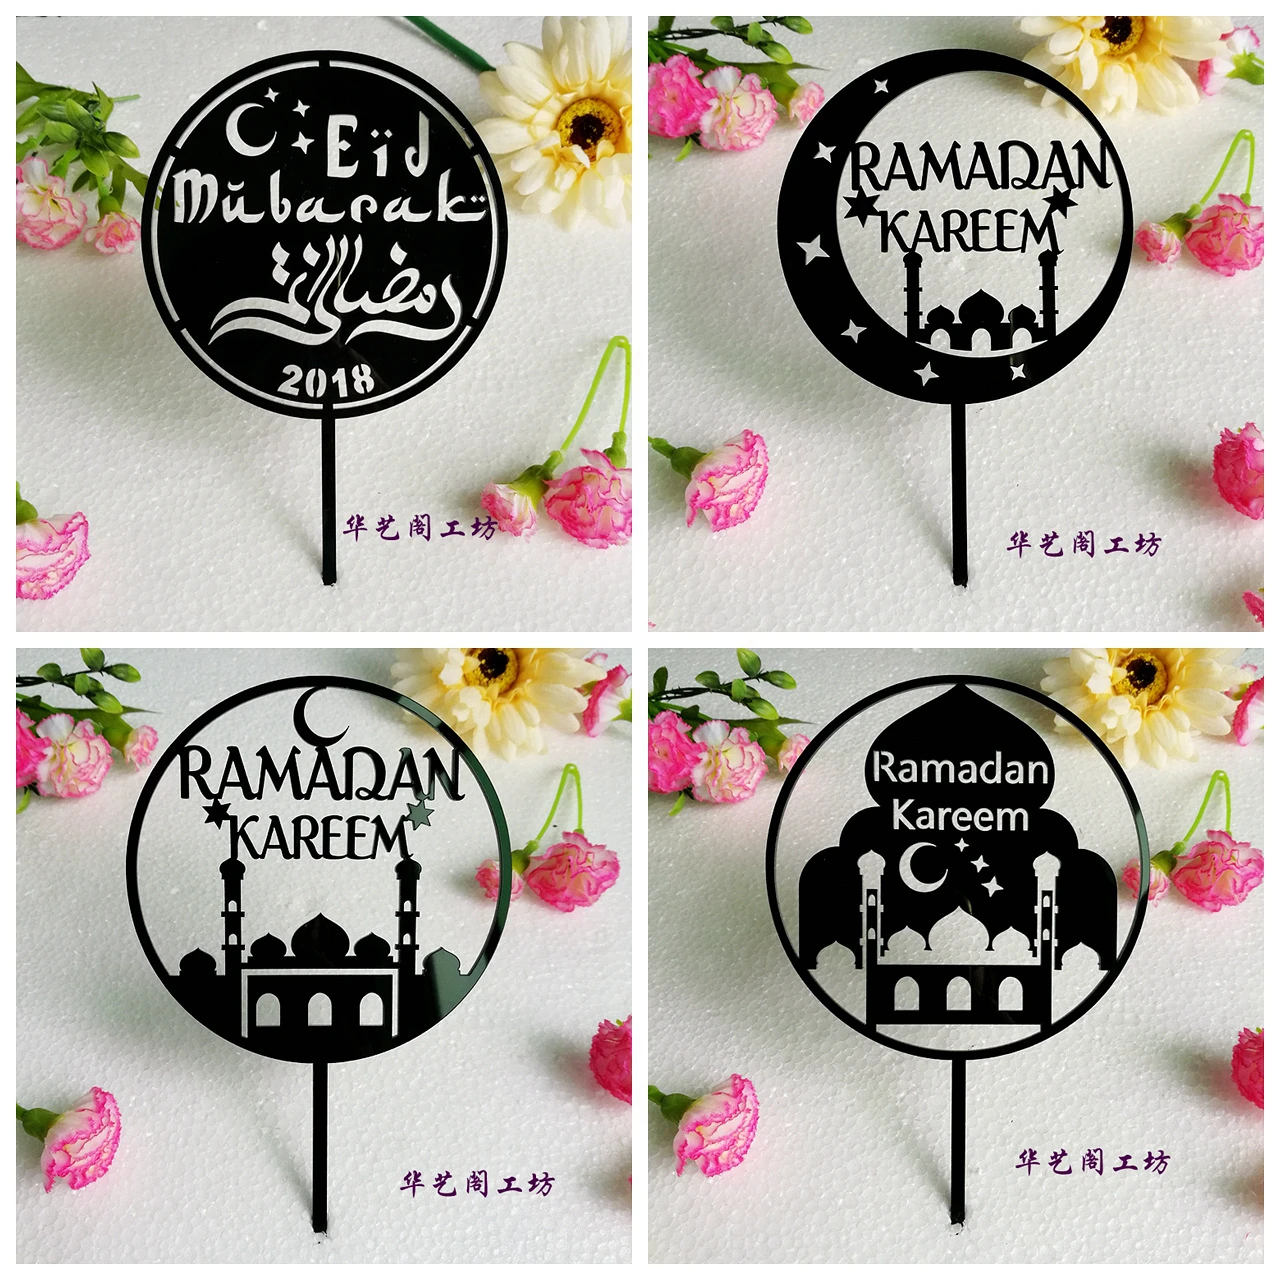 Eid Mubarak Kue Toppers 8 Pernikahan Pesta Ulang Tahun Baby Shower Ramadan Dekorasi Hitam Emas Topper Kue Muslim Eid Baking Perlengkapan Dekorasi Cake Aliexpress